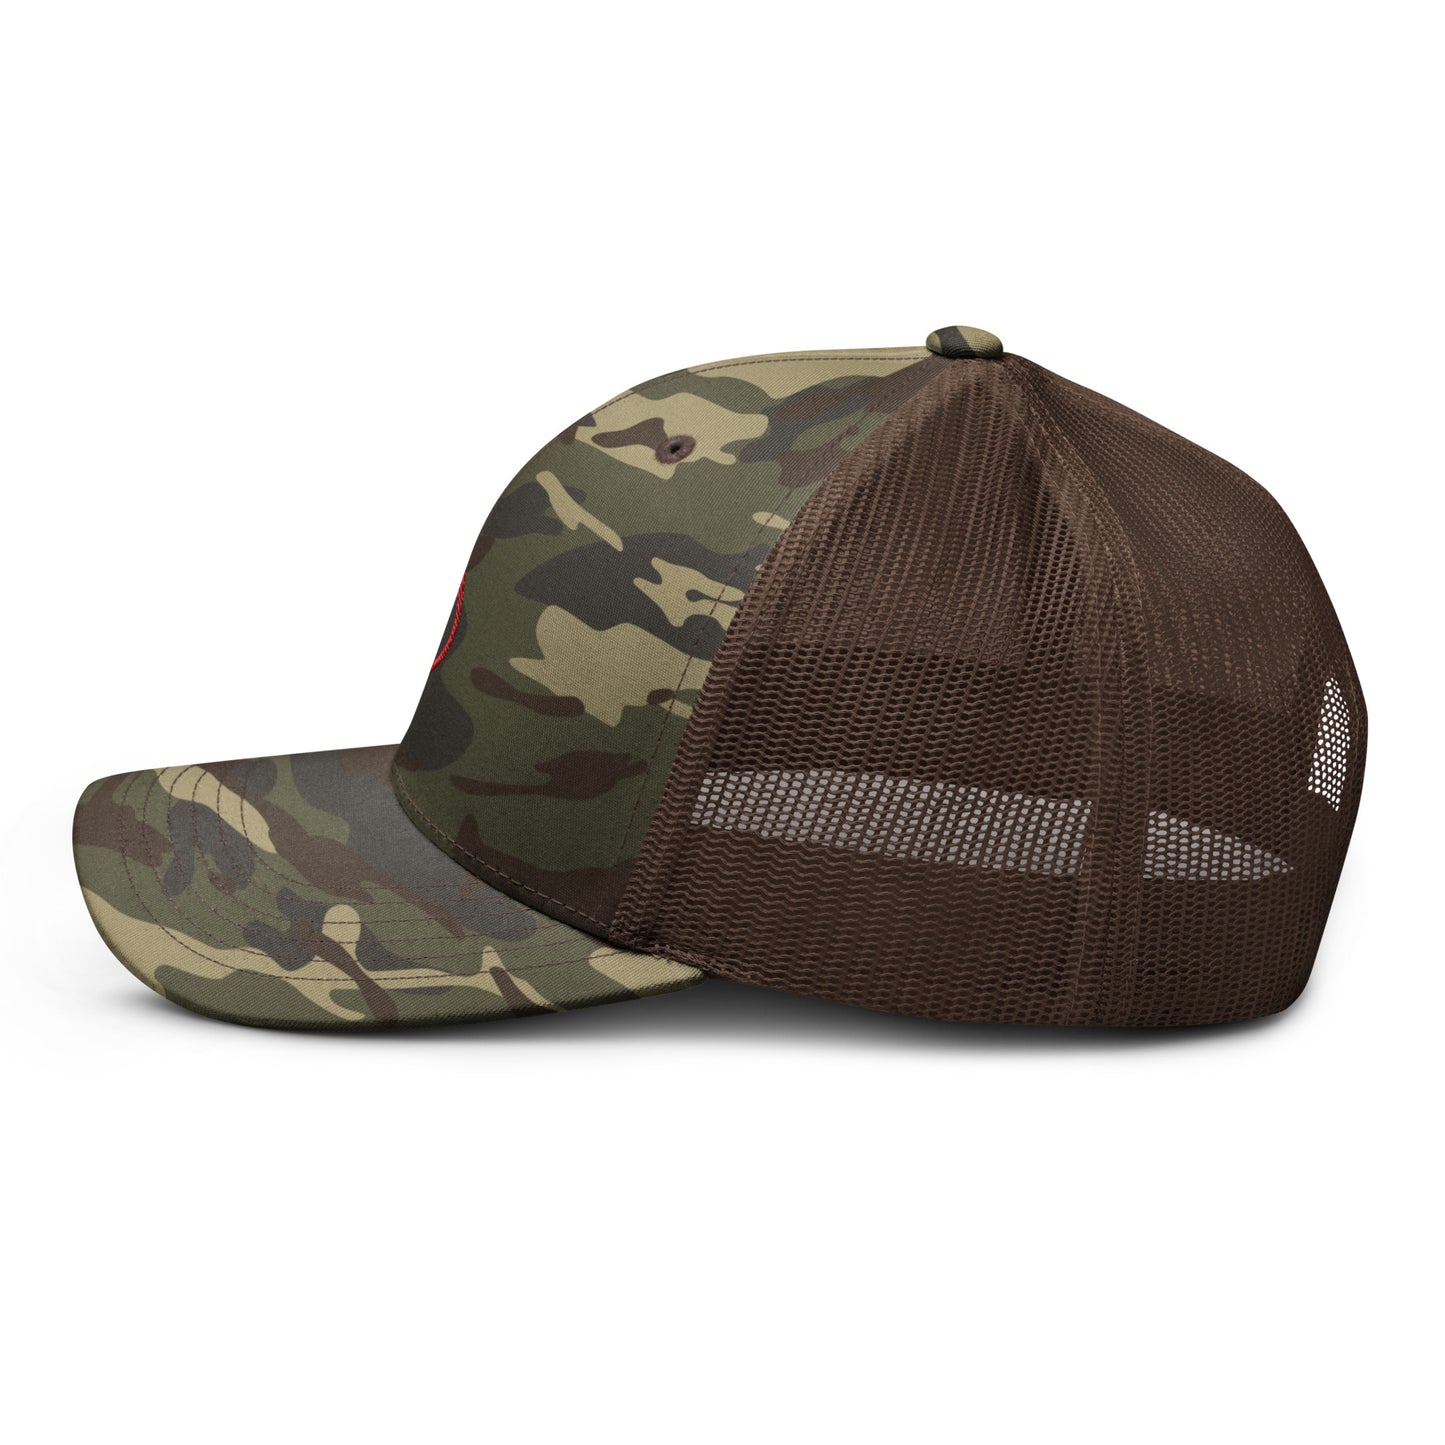 PUCK! Snapback Camouflage trucker hat